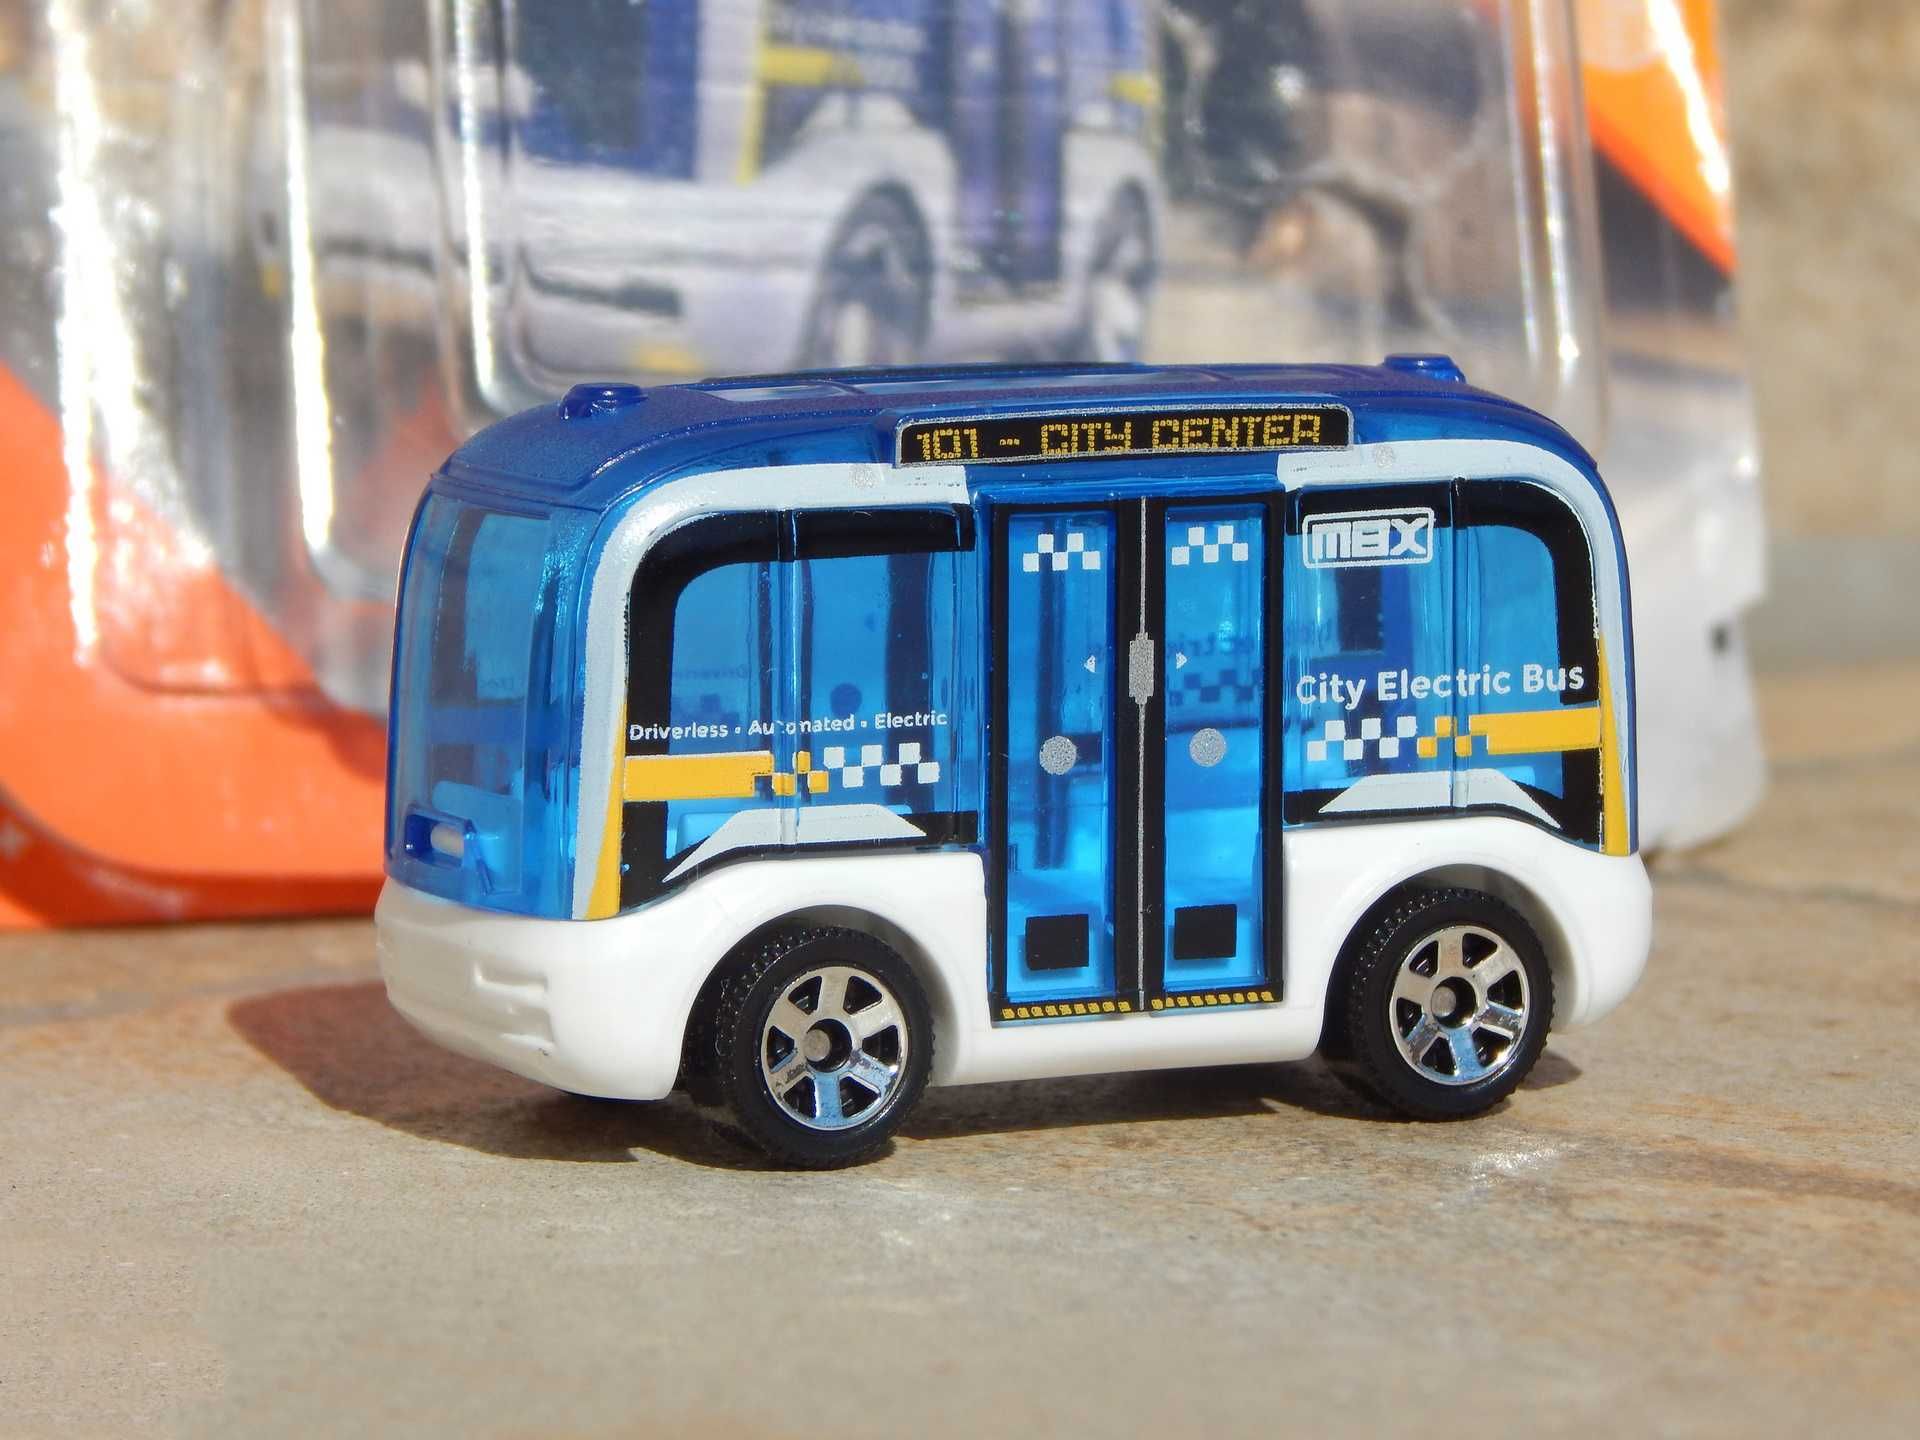 Macheta autobuz electric autonom Self Driving Bus Matchbox cu ambalaj